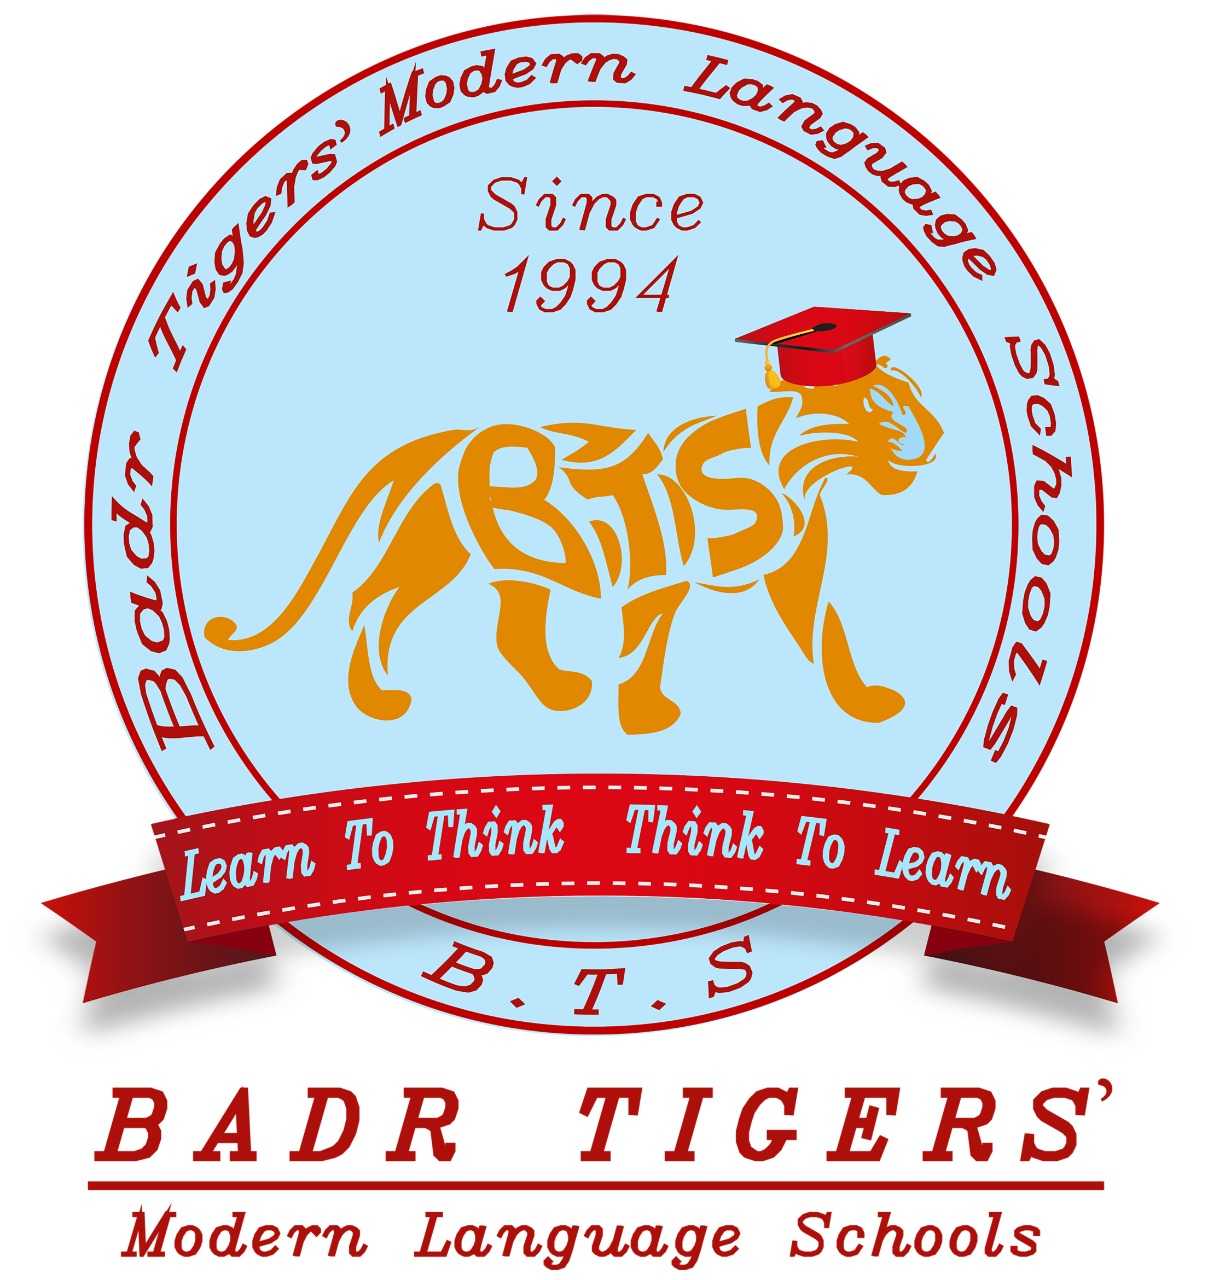 Badr Tigers' Modern Language Schools